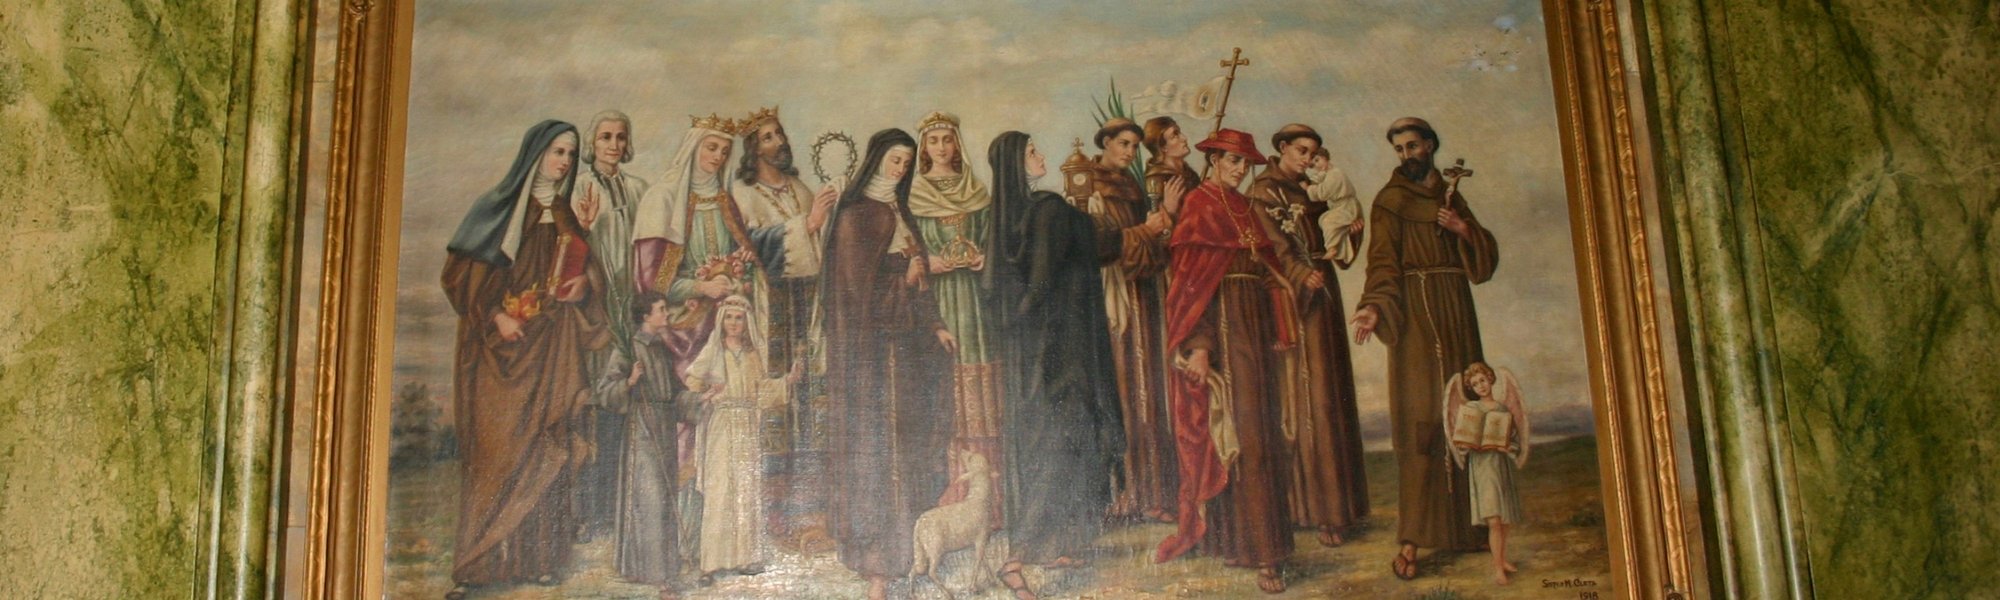 Franciscan Heritage